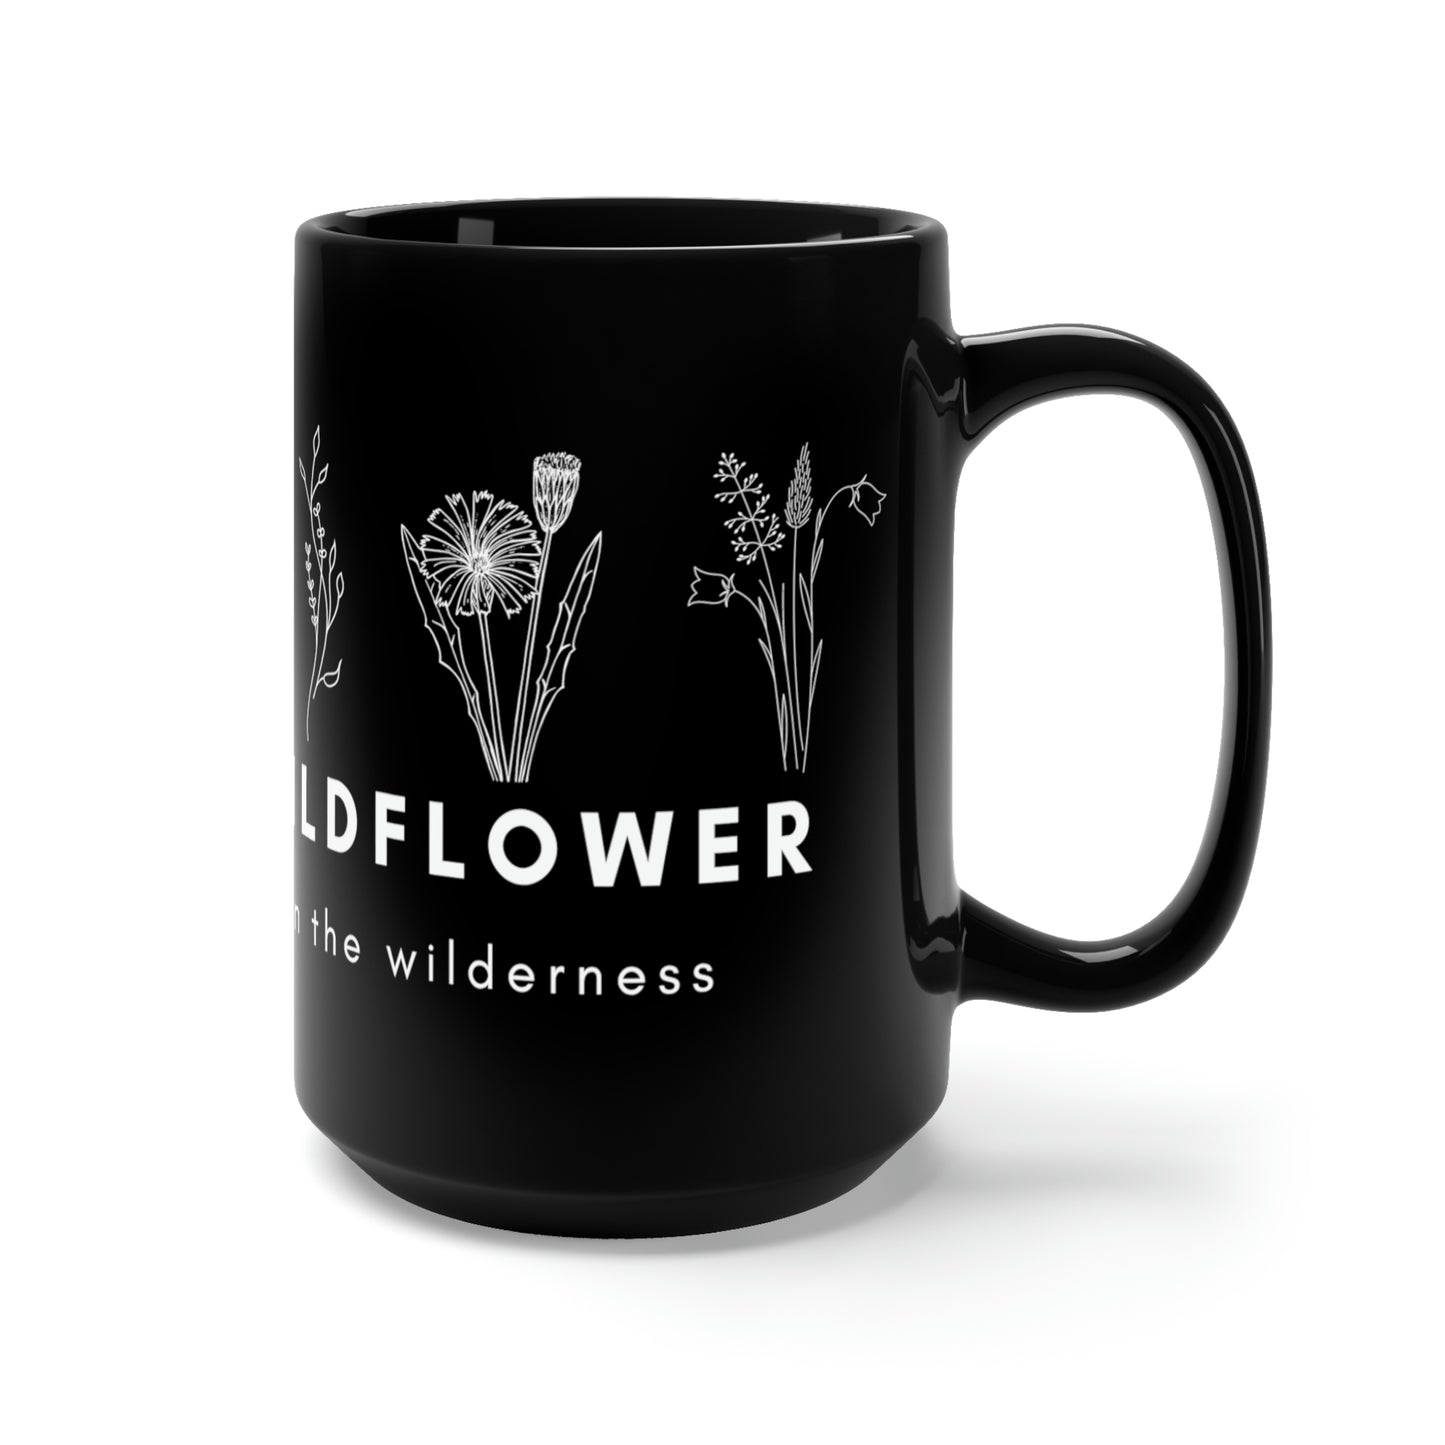 Wildflower in the Wilderness Mug